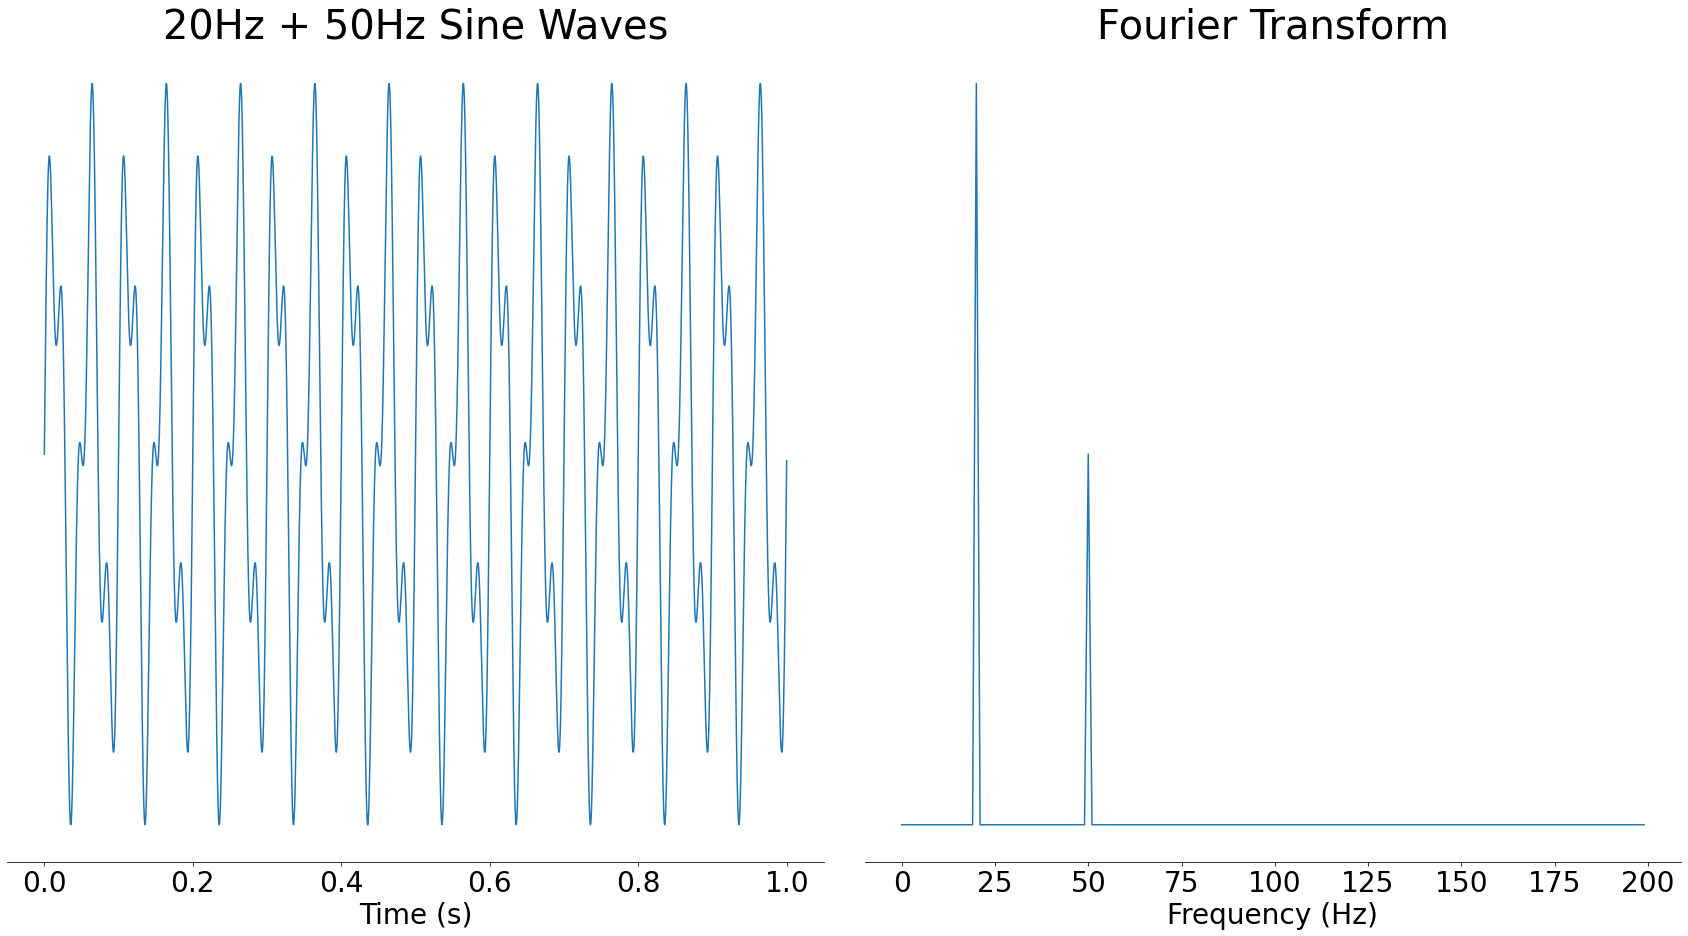 20Hz sine wave plus 50Hz sine wave and its Fourier transform